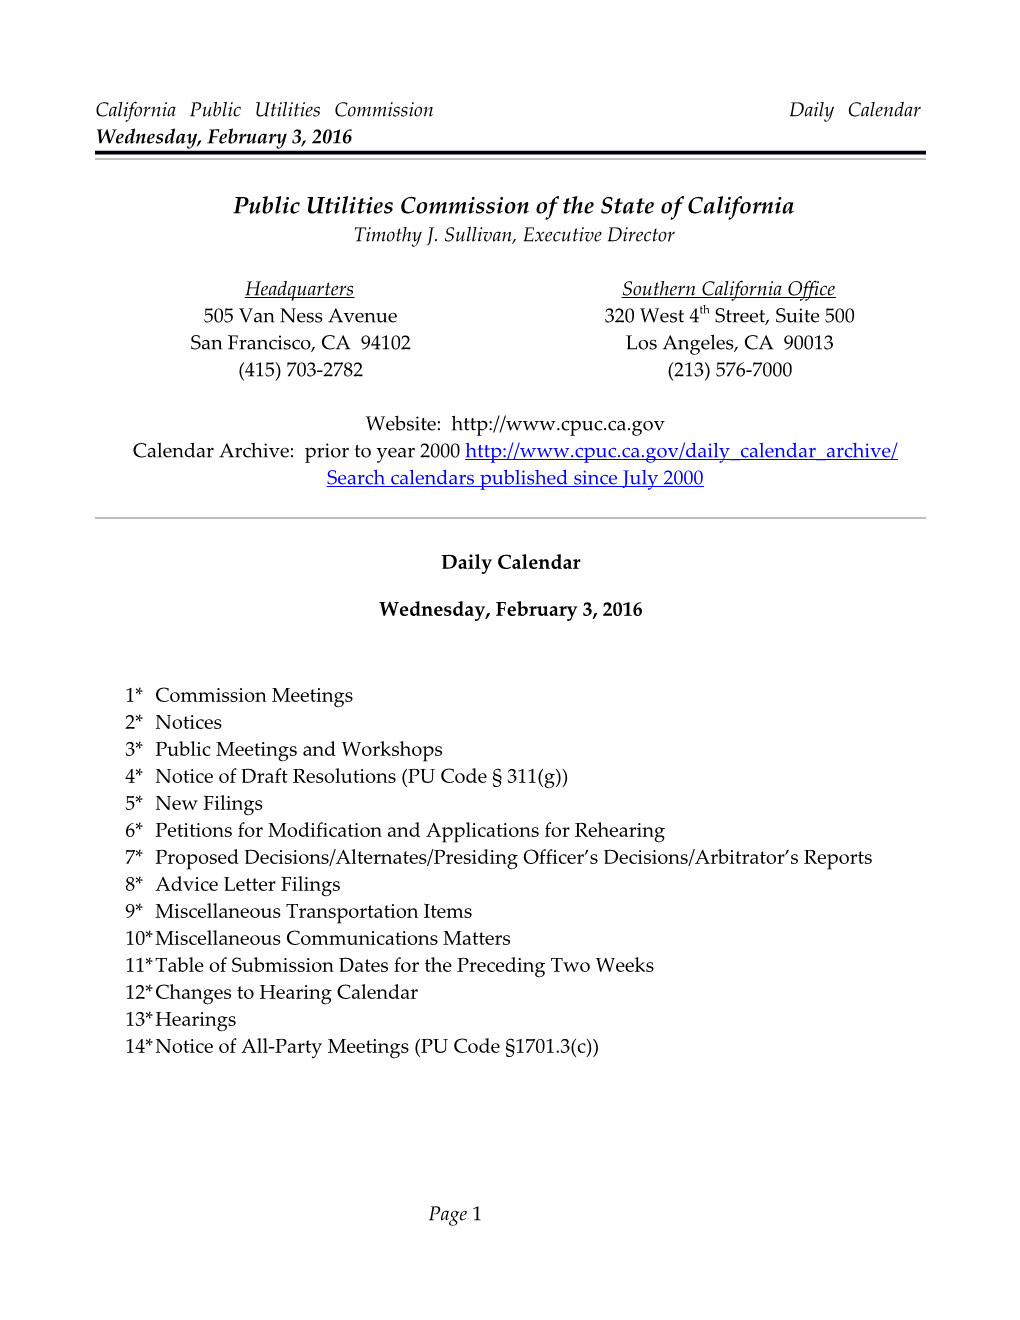 California Public Utilities Commission Daily Calendar Wednesday, February 3, 2016